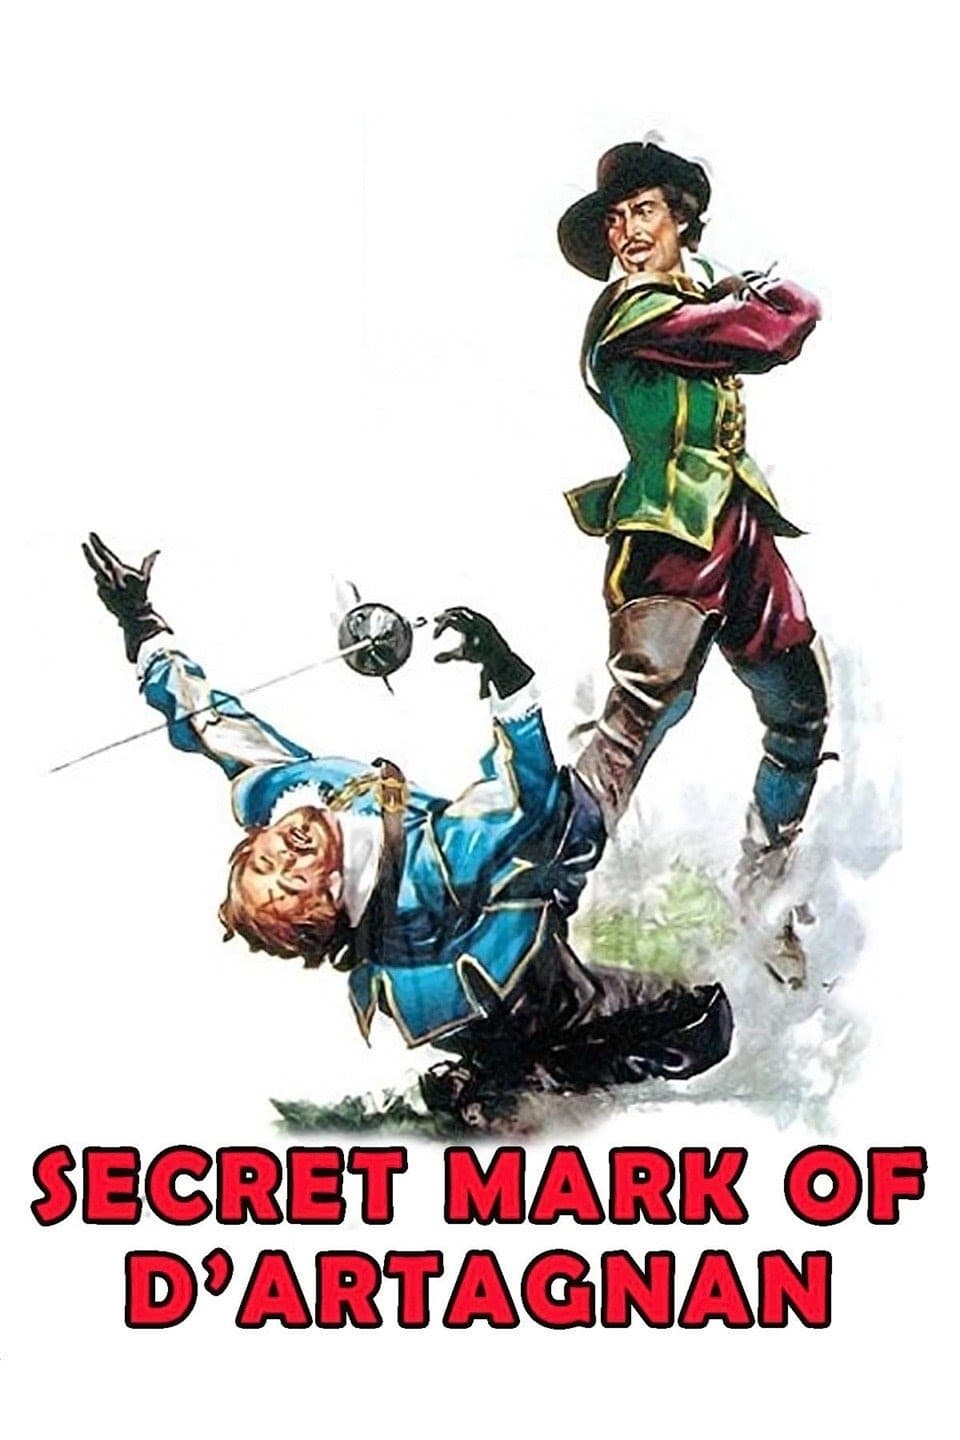 The Secret Mark of D'Artagnan (1962)